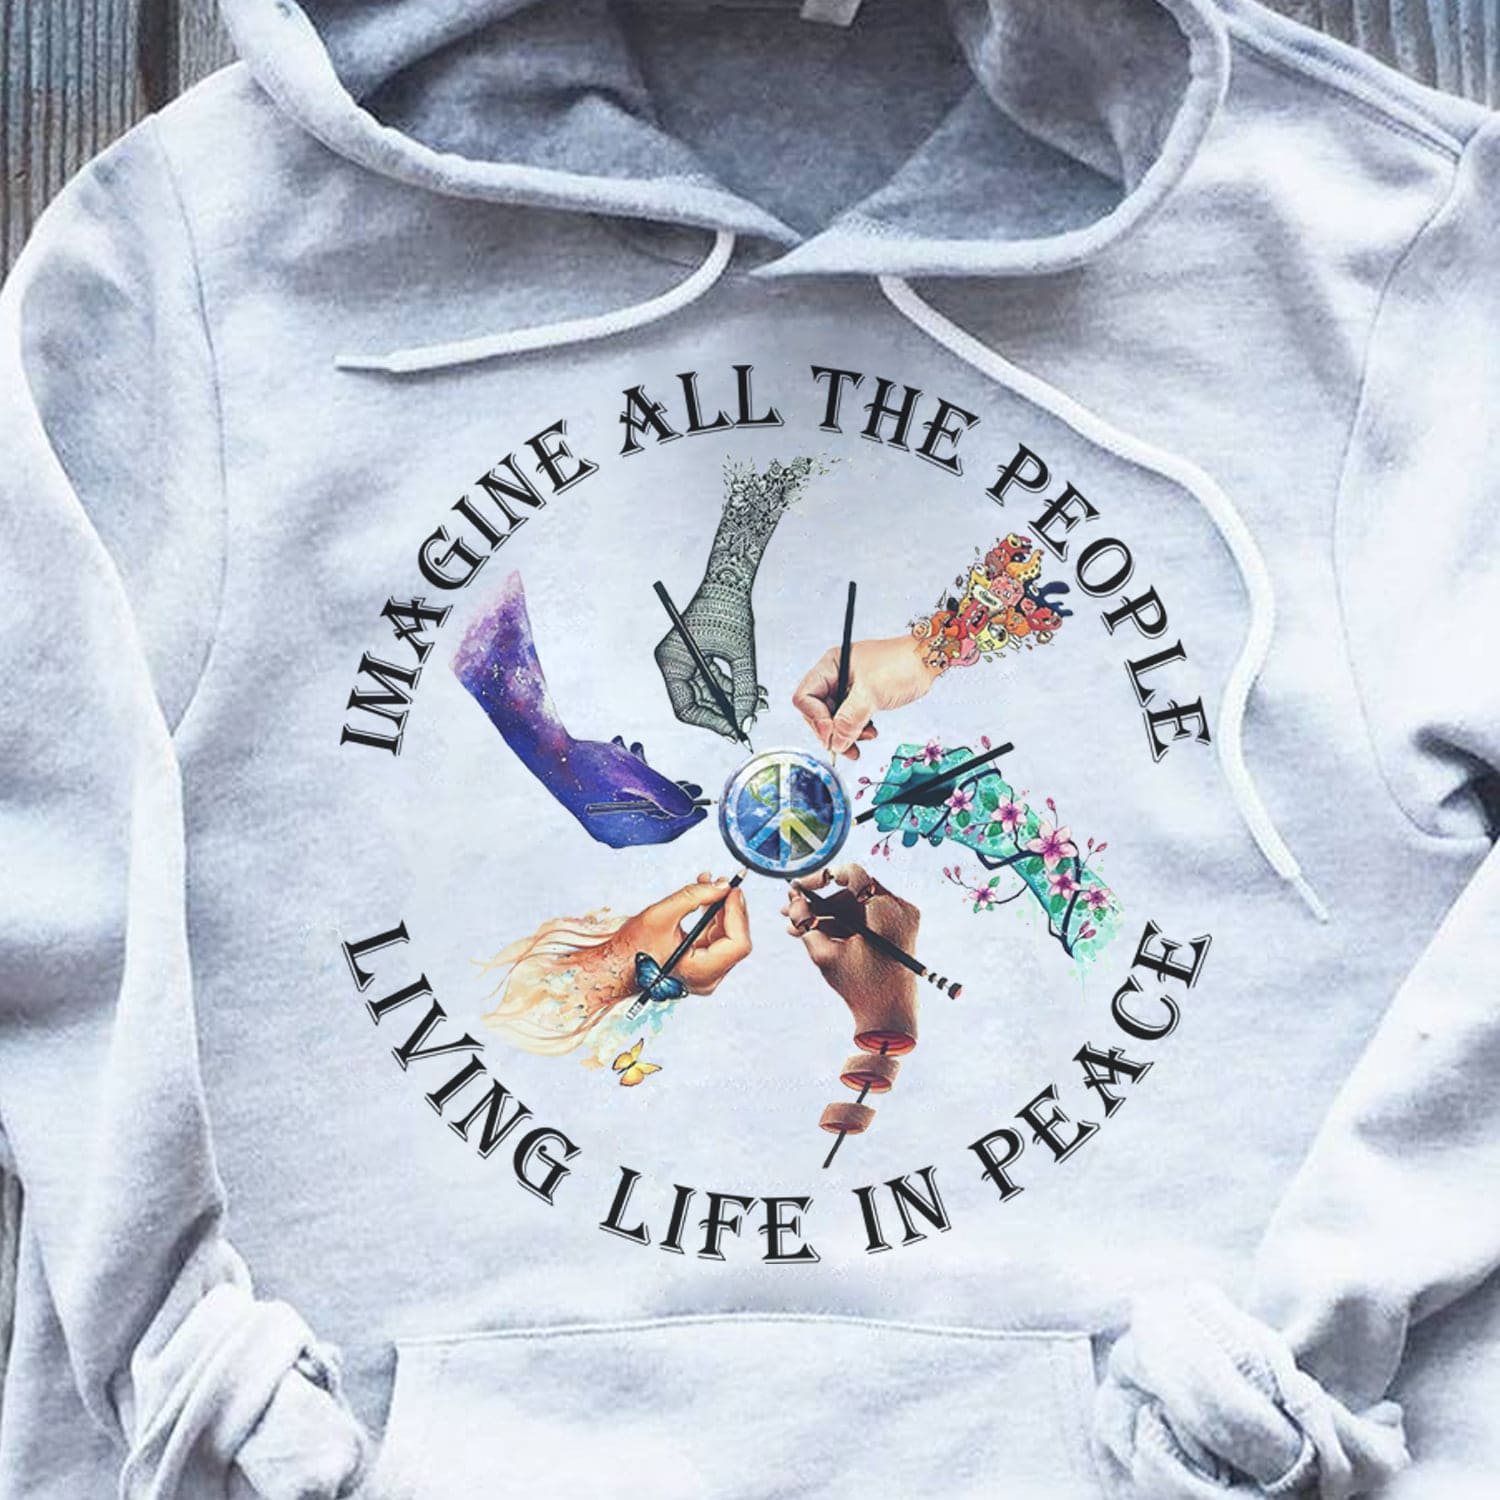 Imagine all the people, living life in peace - Peaceful life symbol, Spread peaceful